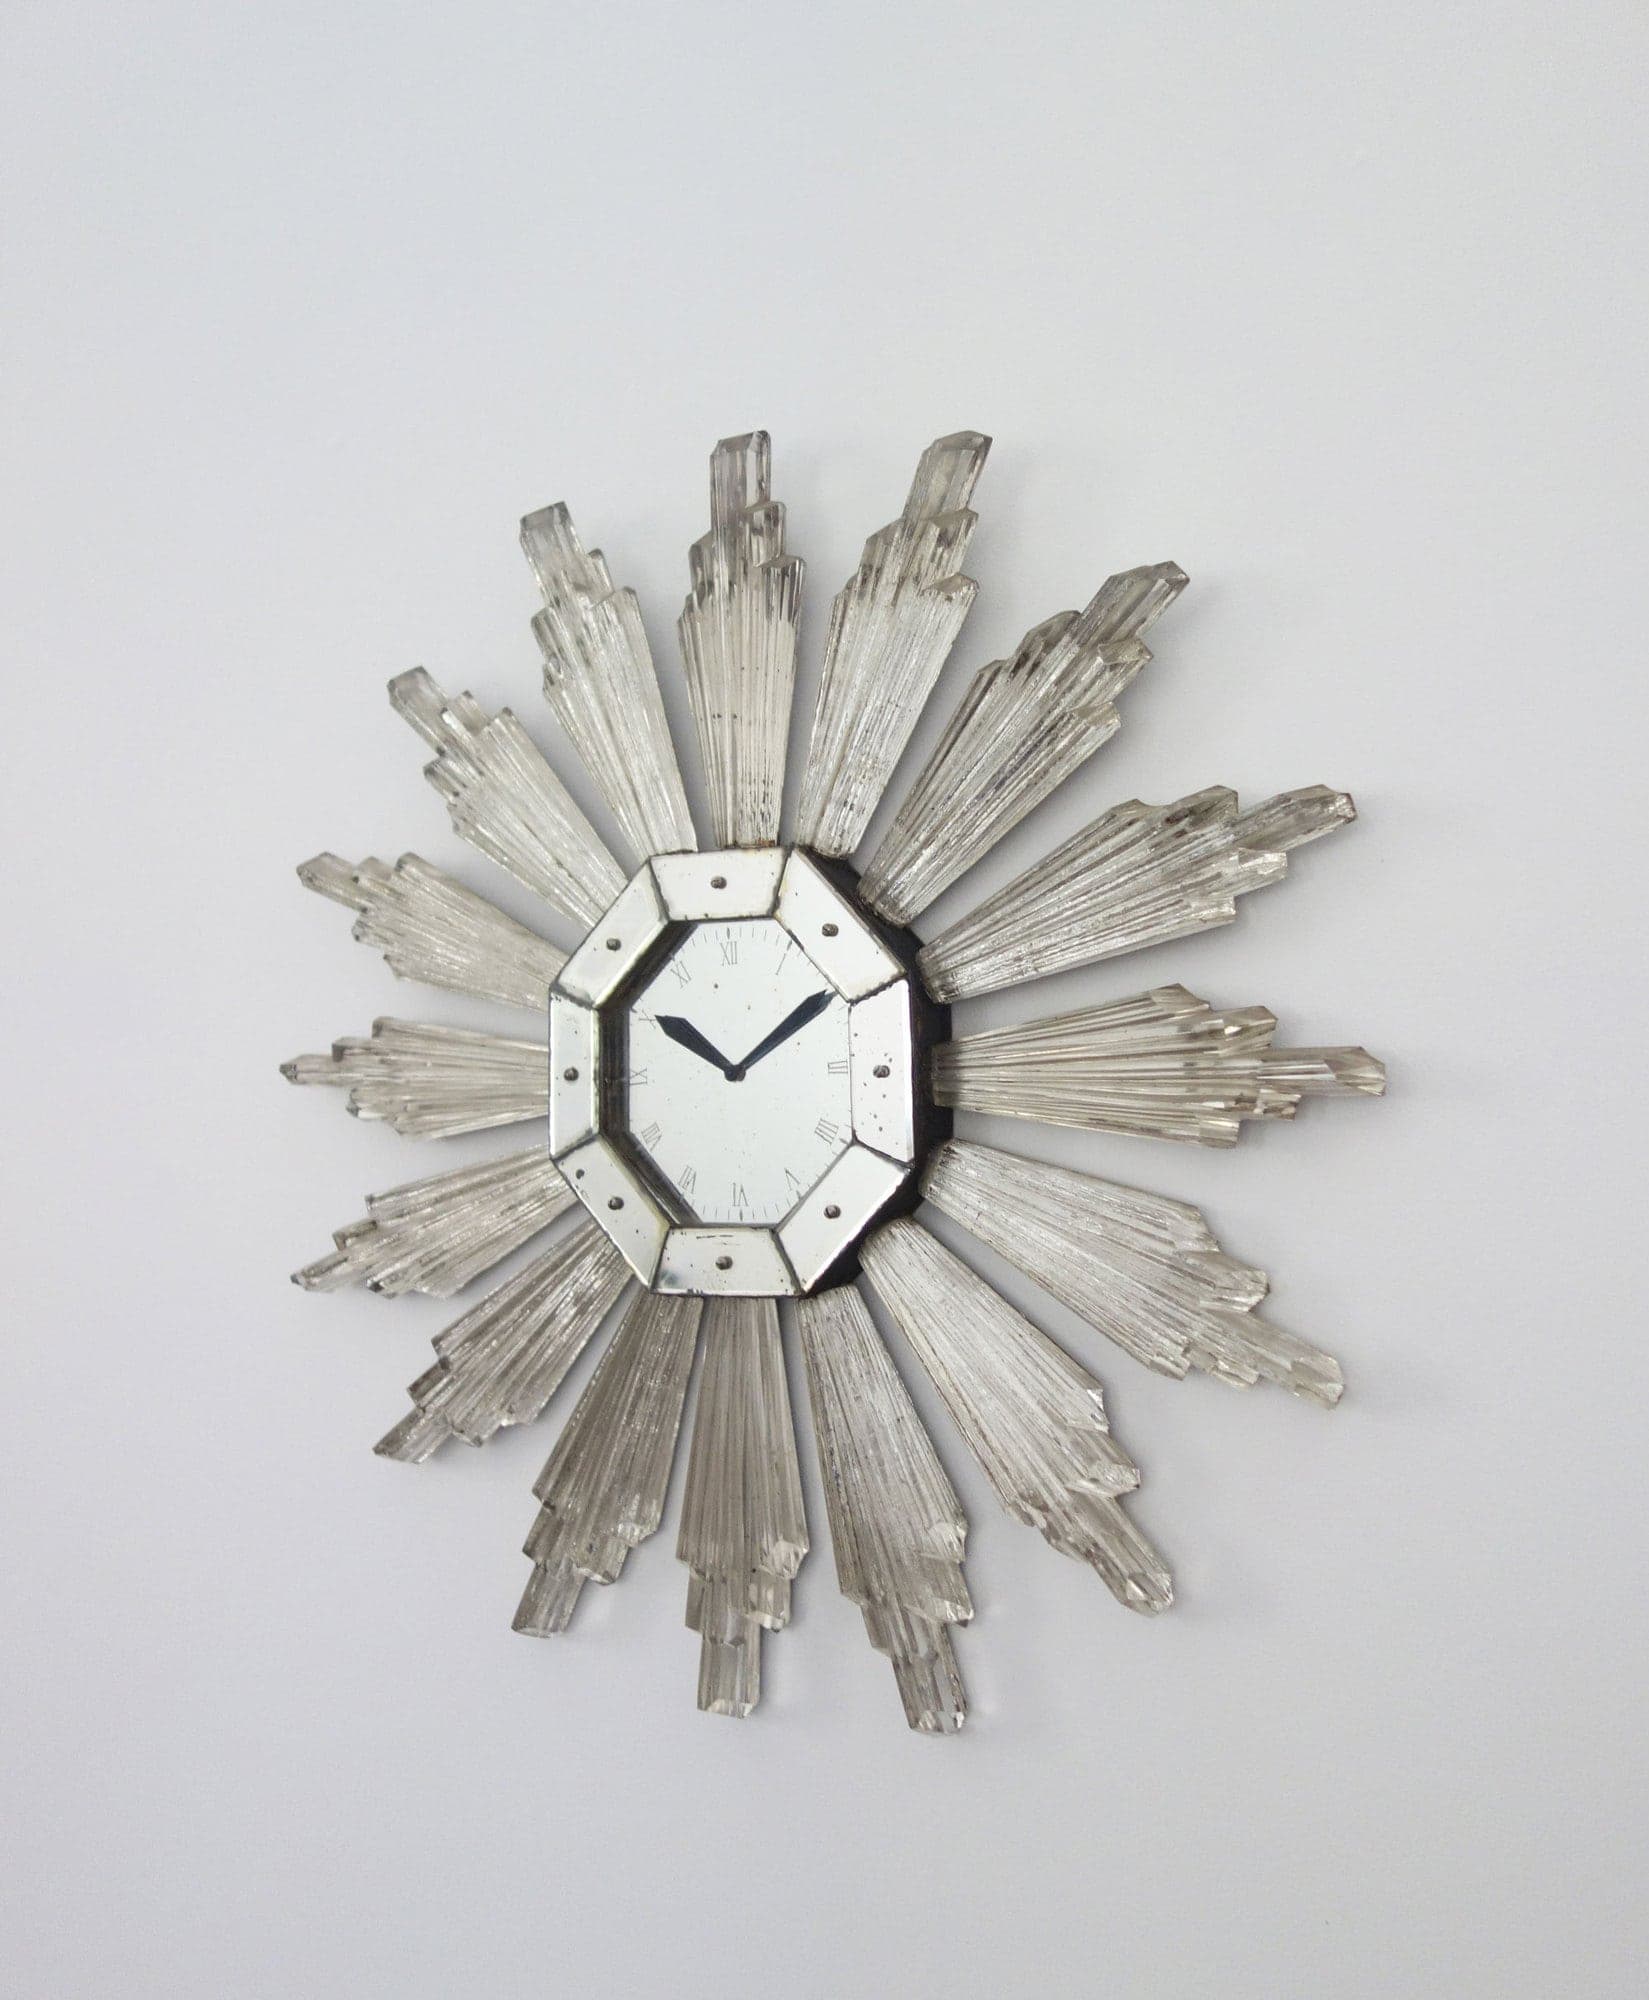 Serge Roche, Très rare horloge murale (vendue), vue 02